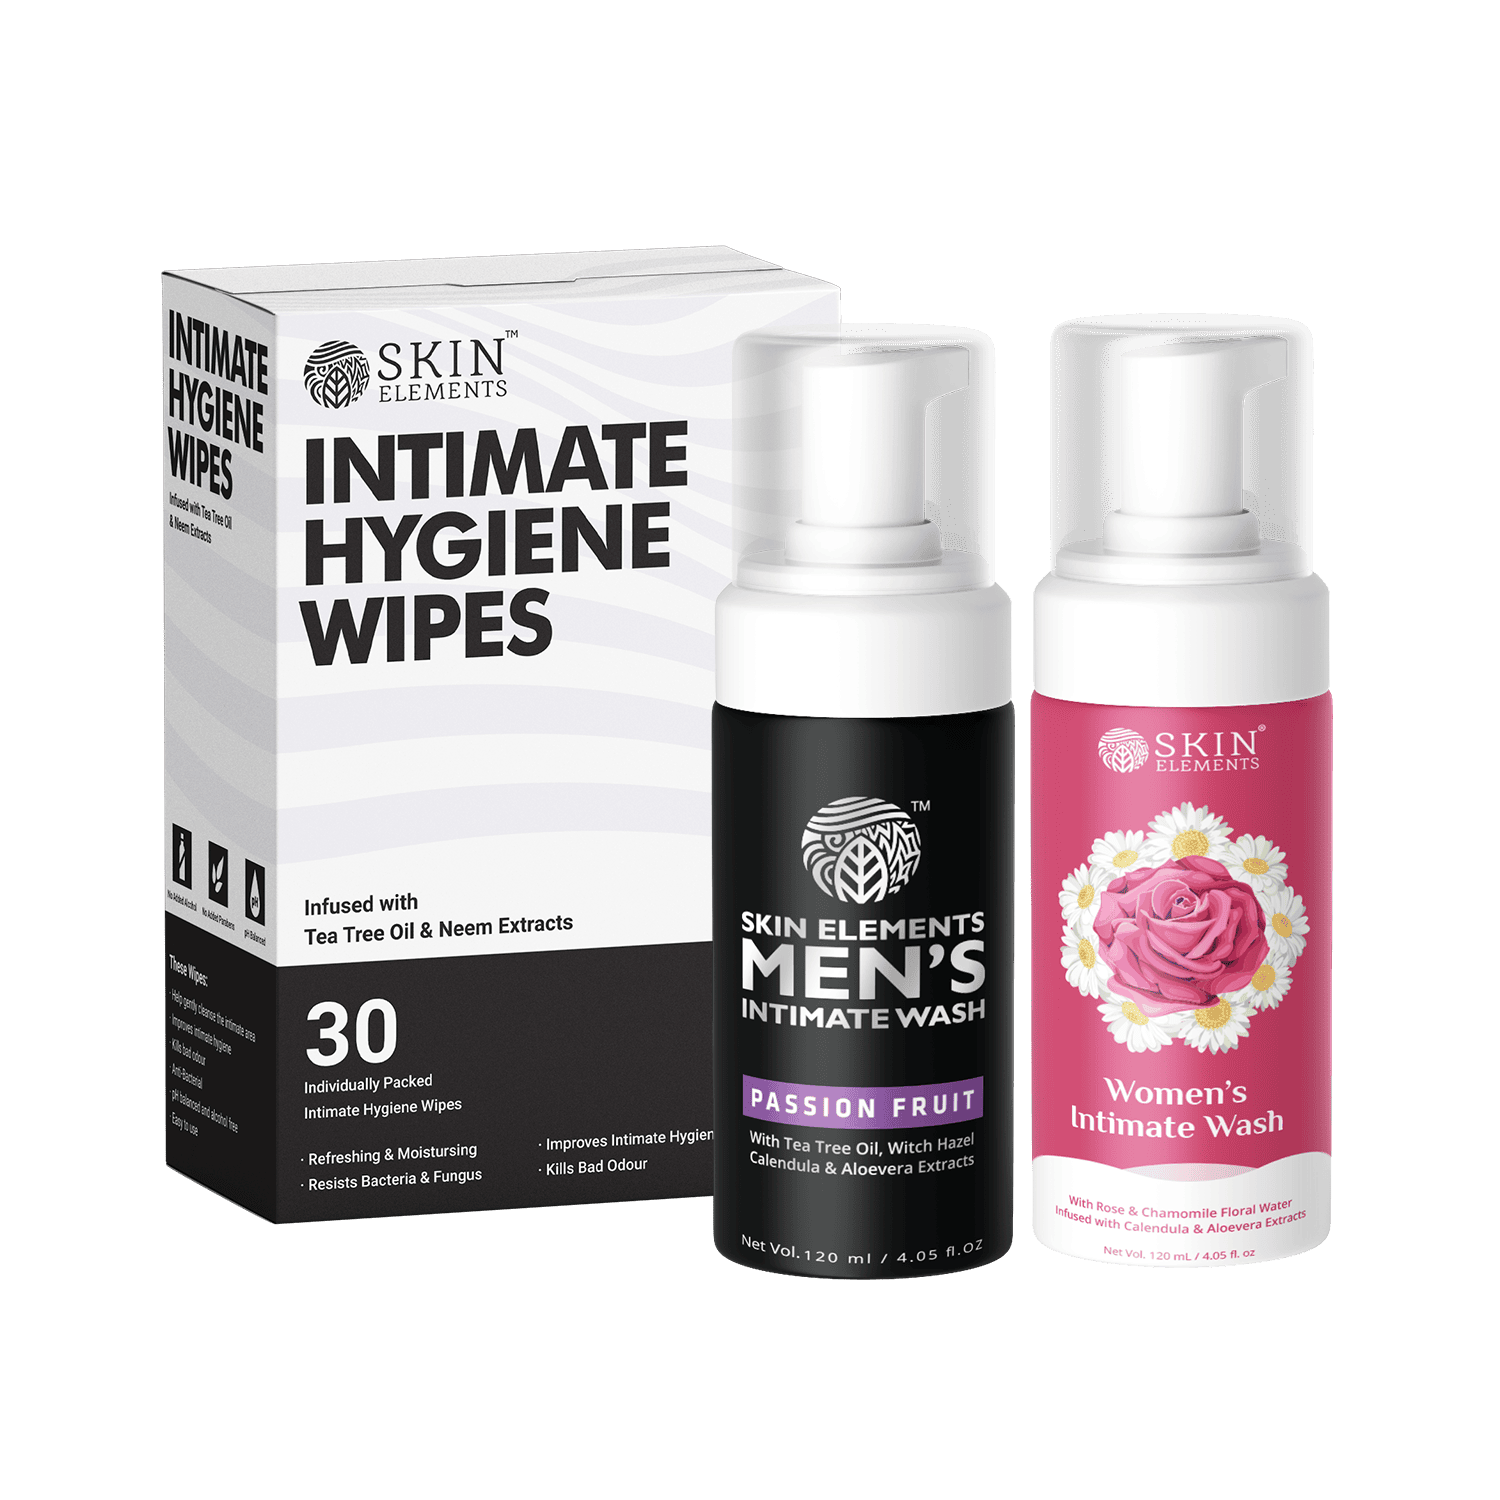  Men's Intimate Wash + Women's Intimate Wash + Intimate Wipes